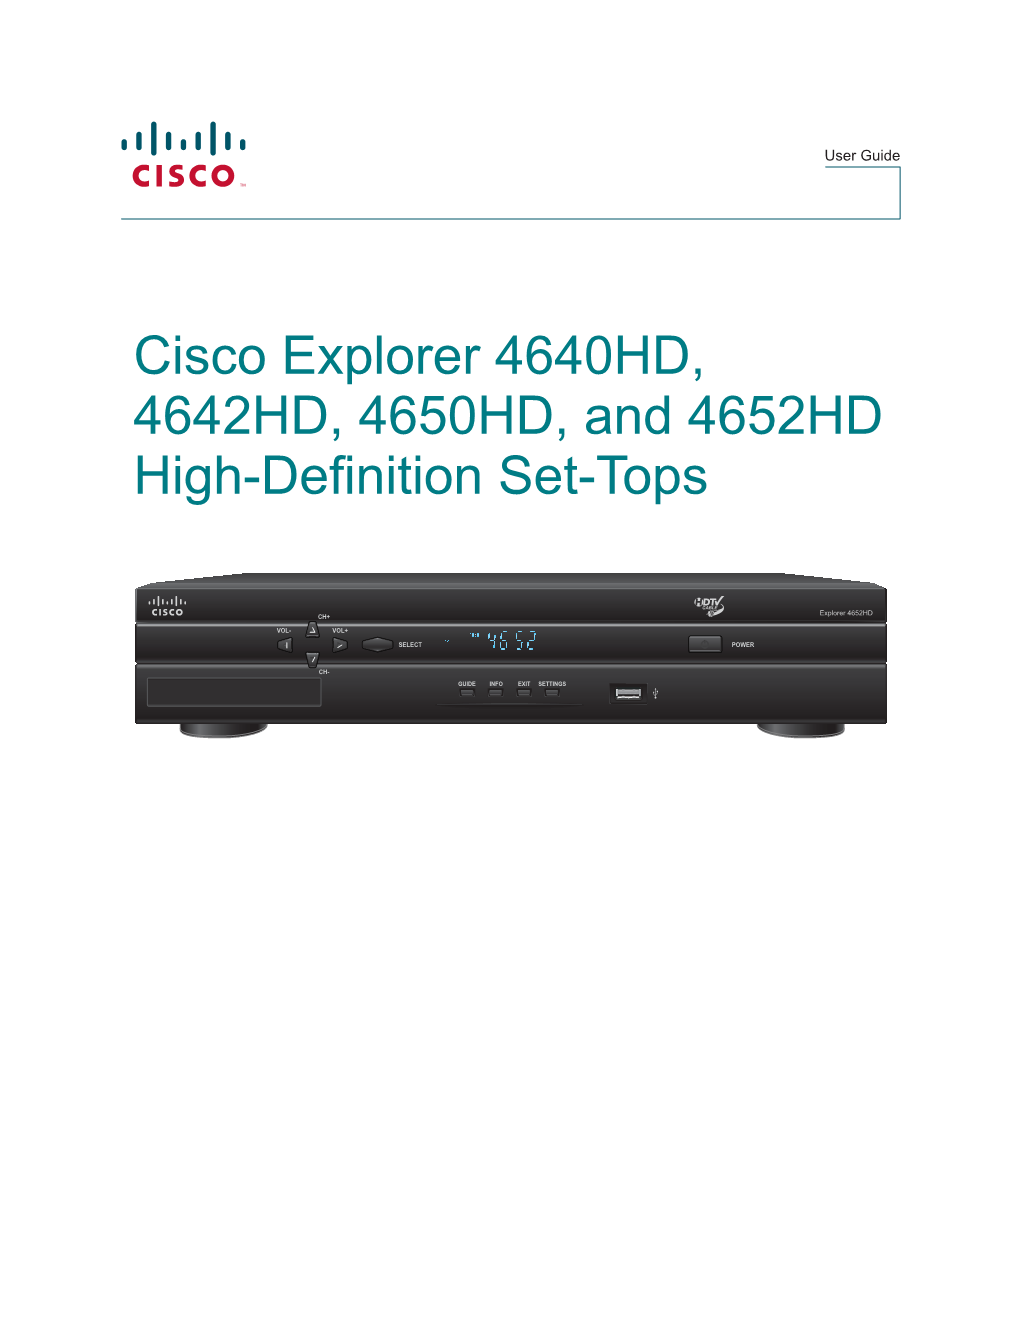 Cisco Explorer 4650HDC